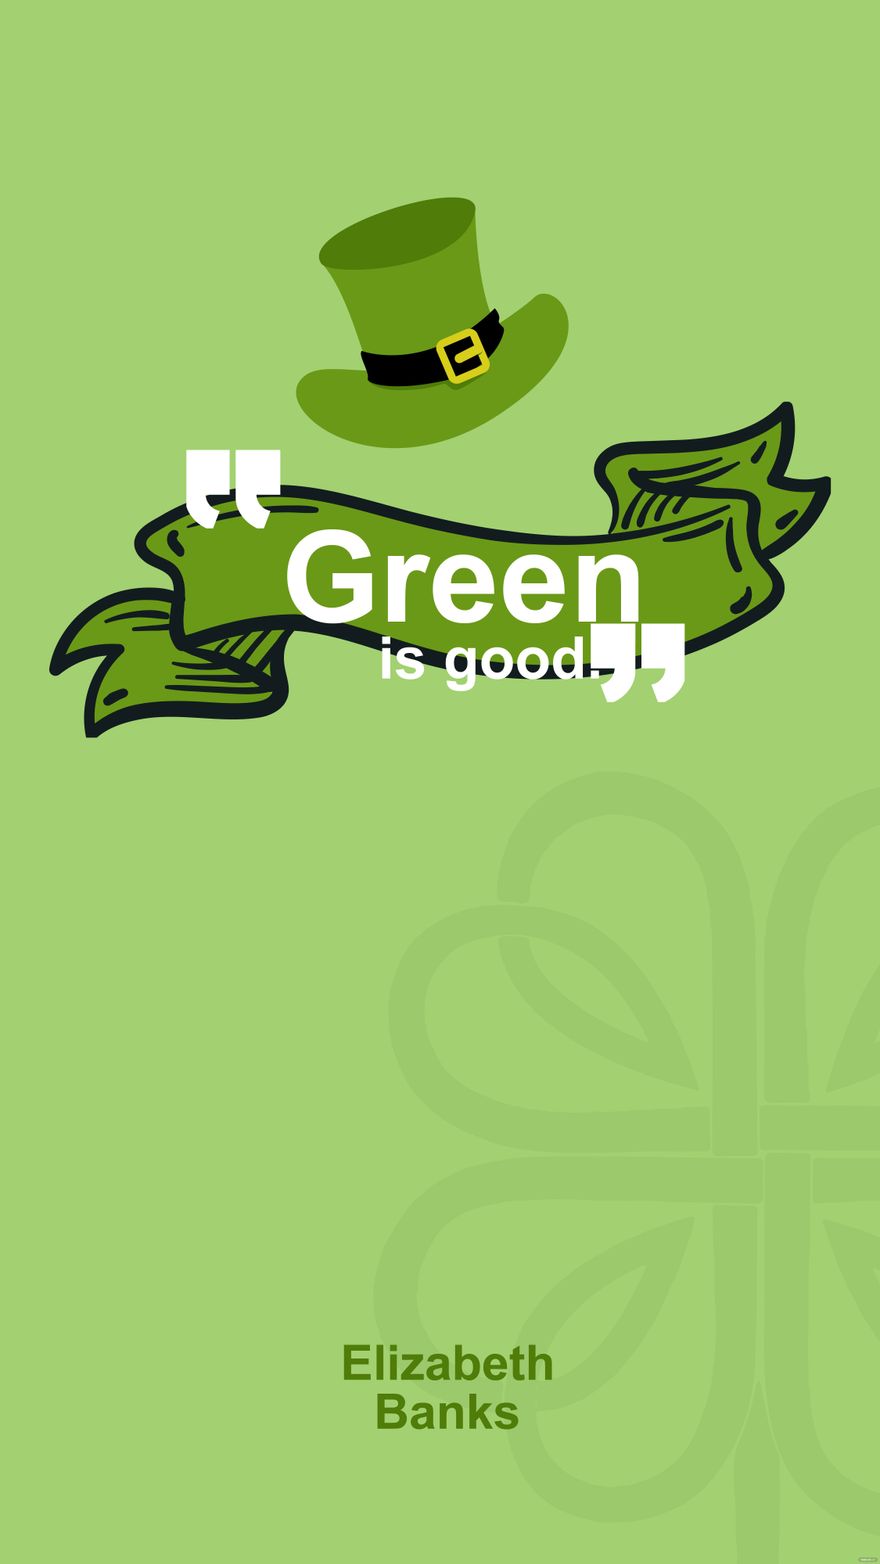 Elizabeth Banks - Green is good.” in JPEG